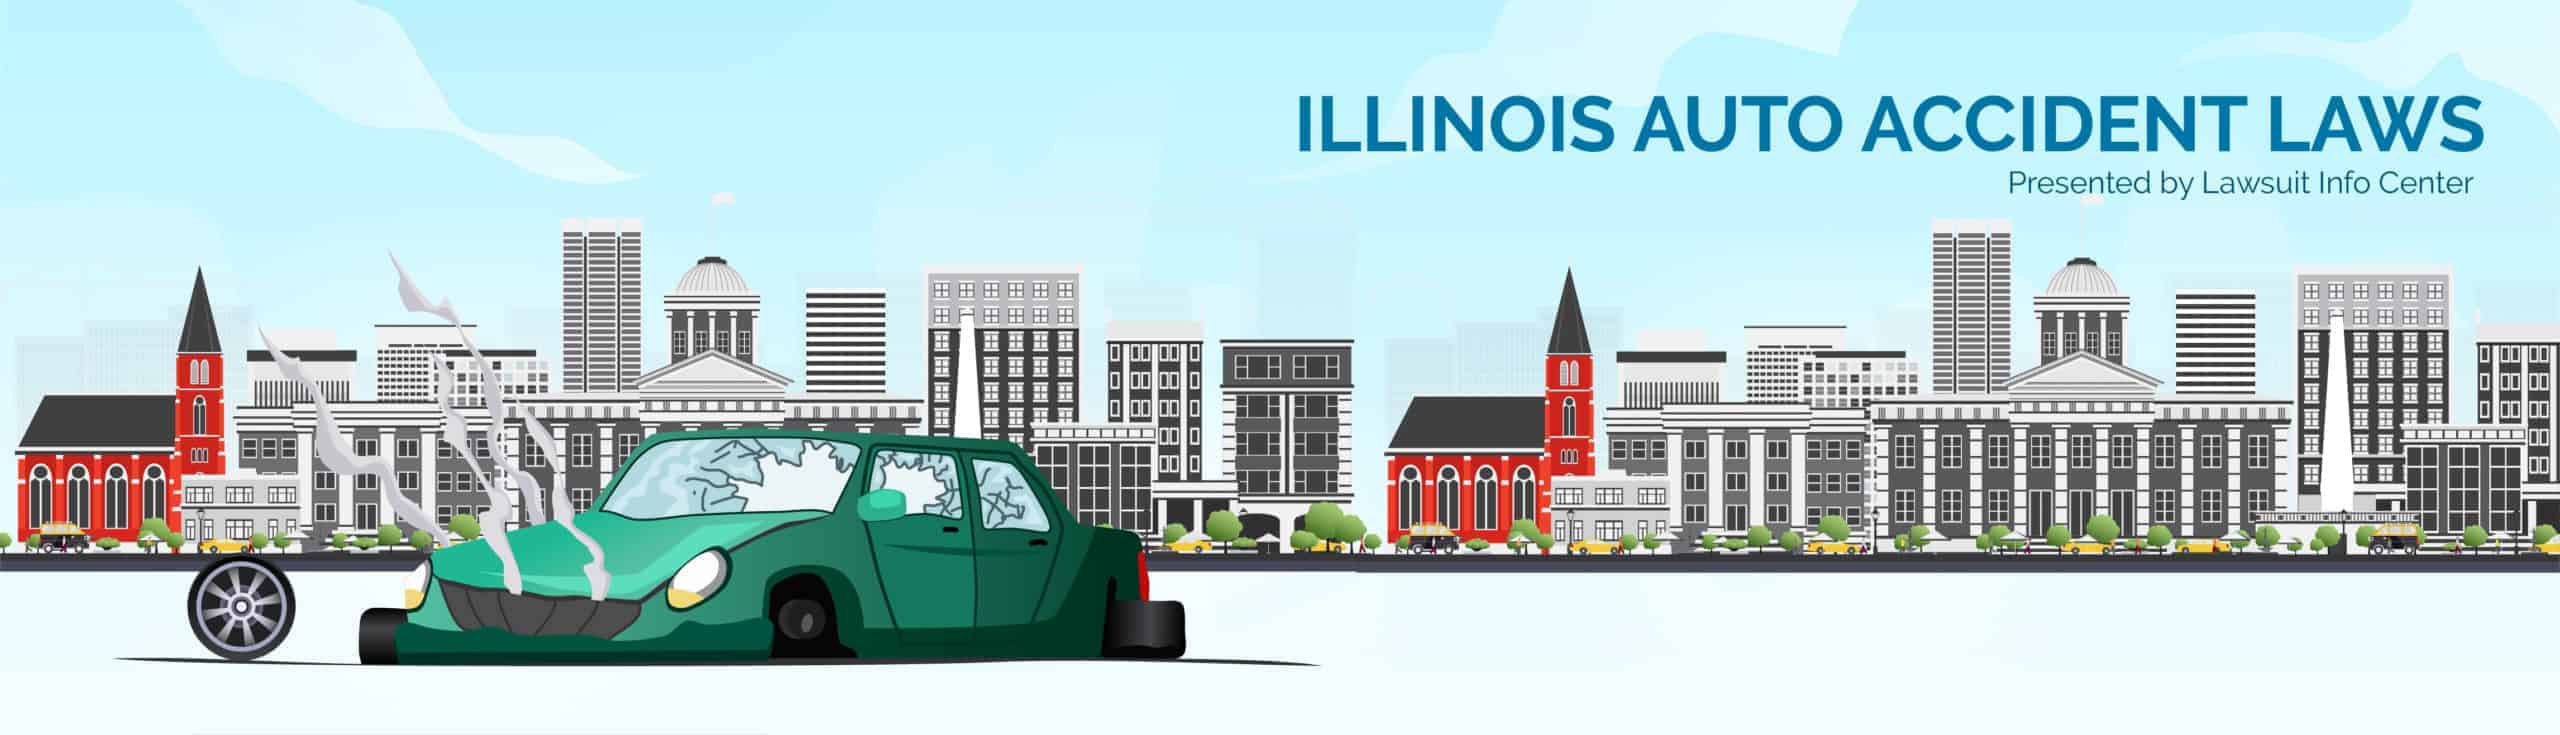 Illinois Auto Accident Laws